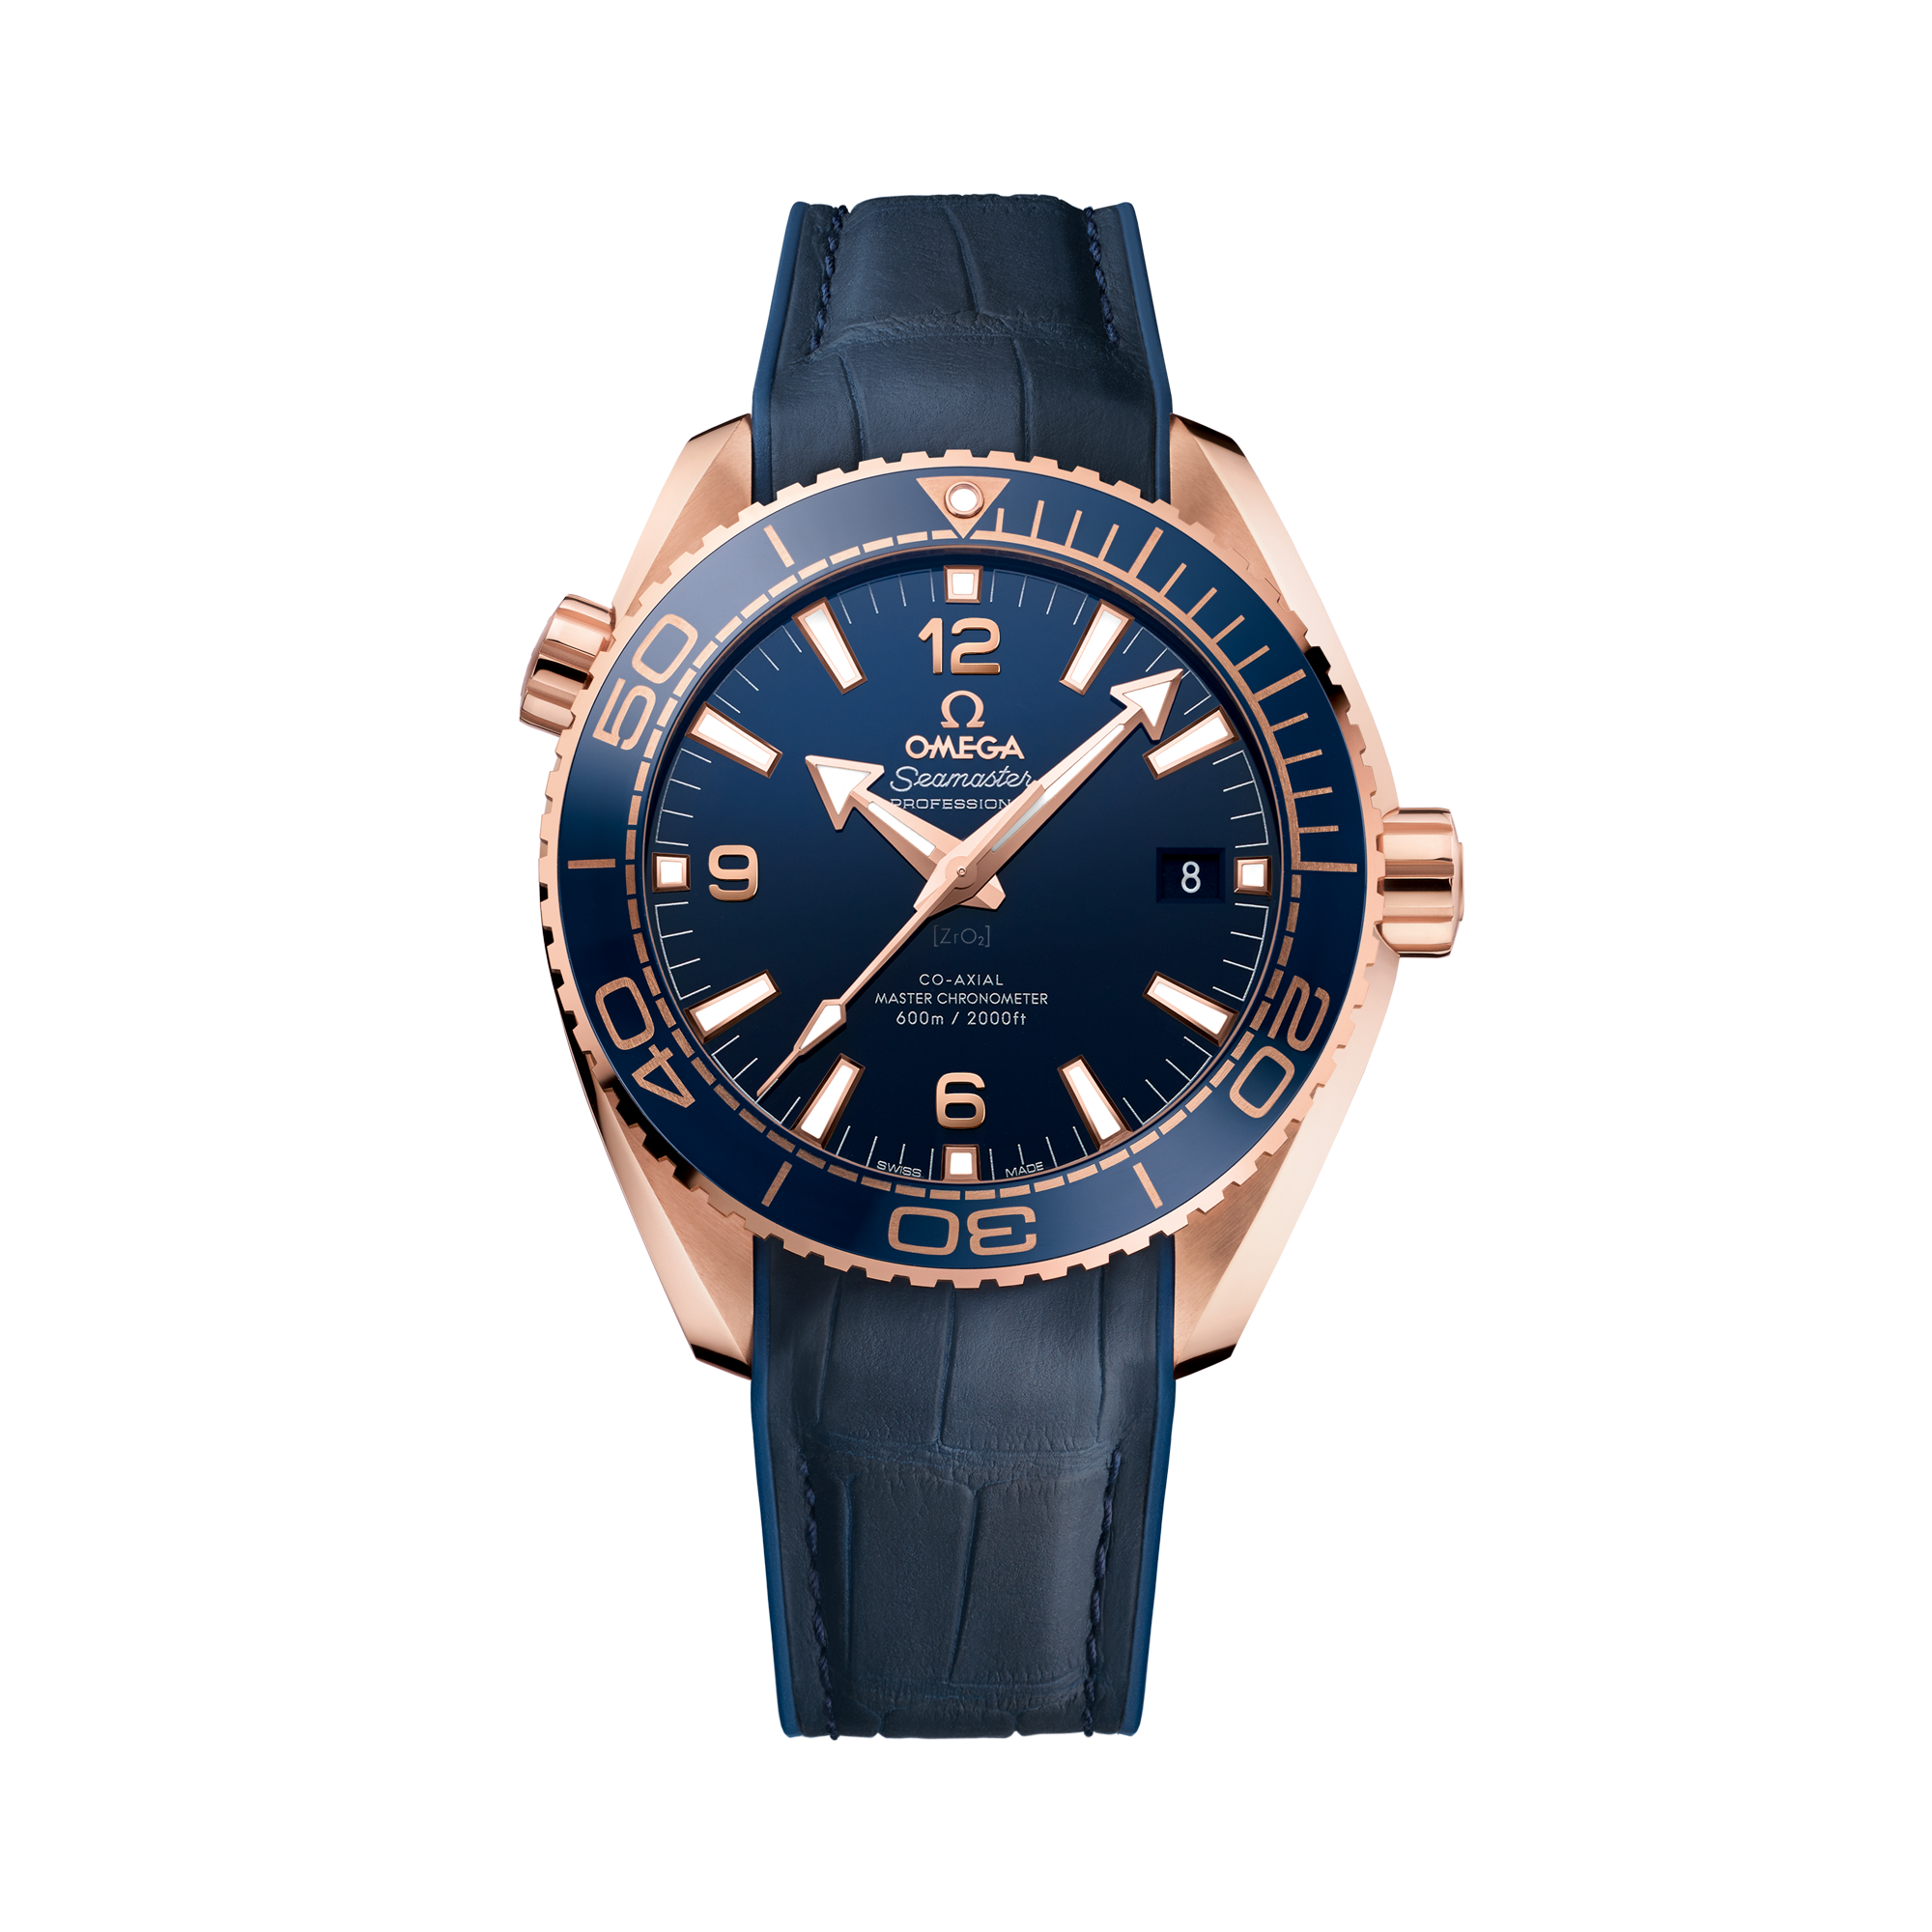 OMEGA Seamaster Planet Ocean 600m 43.5mm, Blue Dial, Arabic/Baton Numerals_1